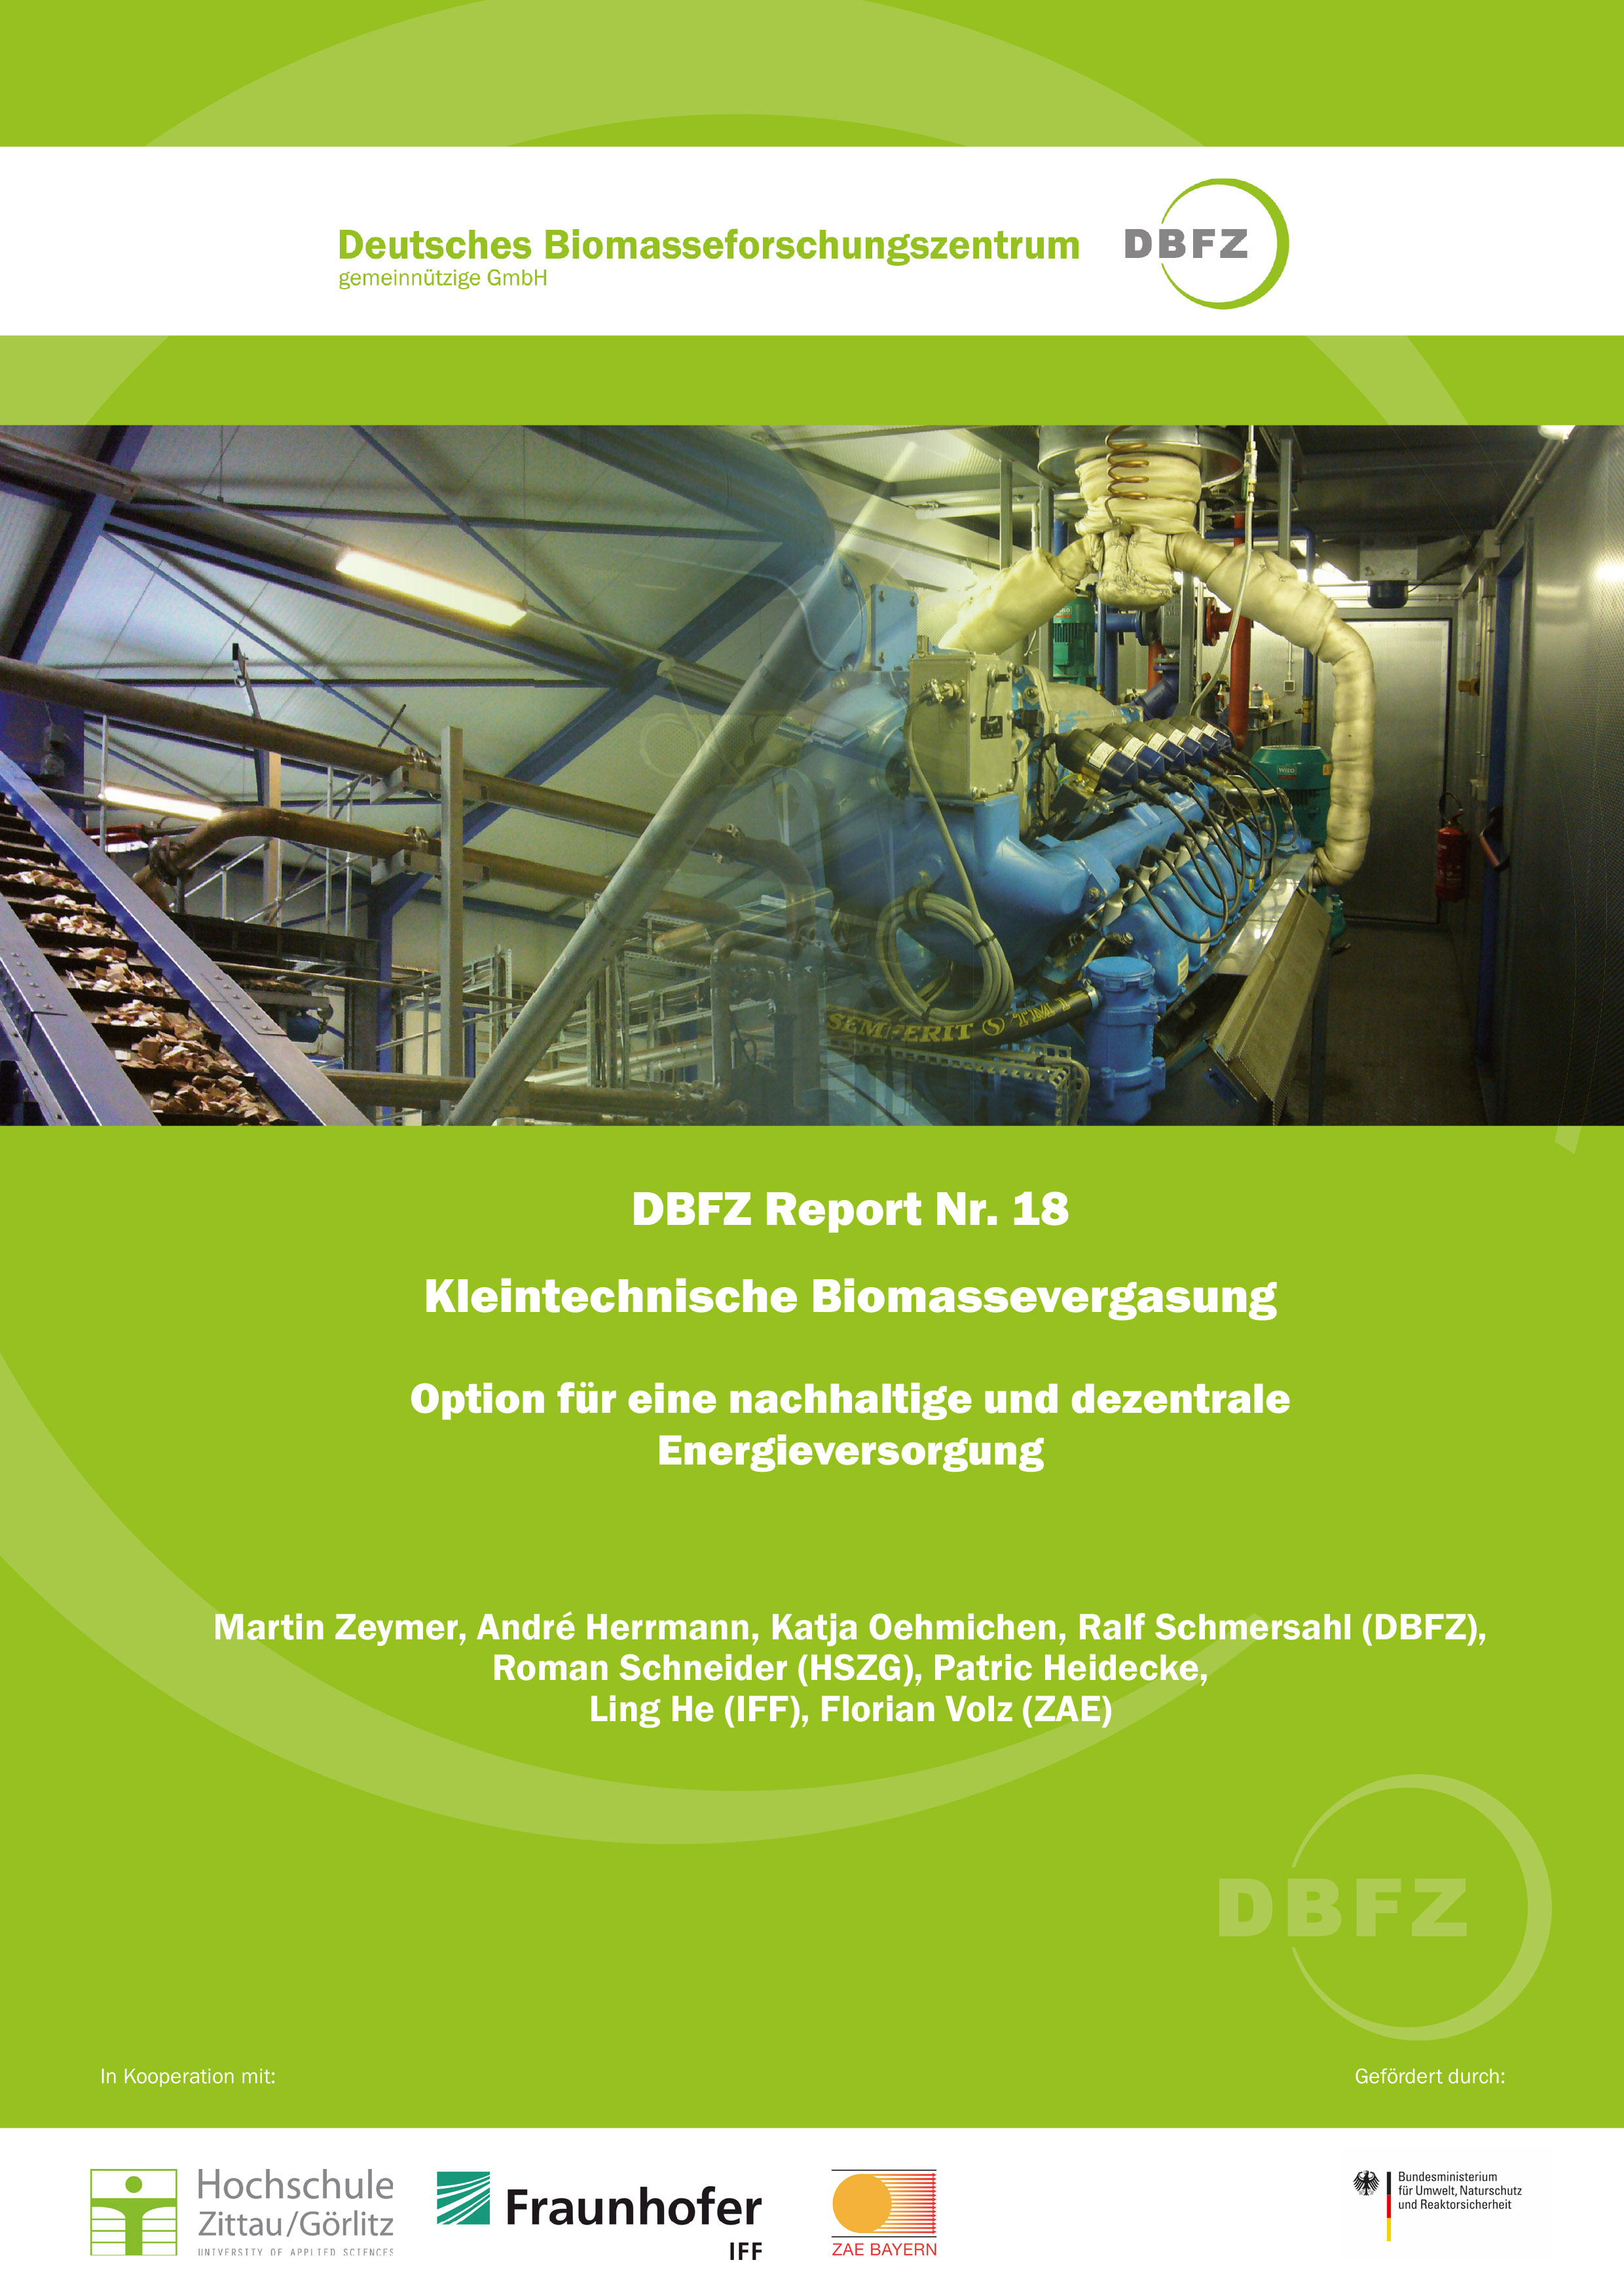 DBFZ Report No. 18